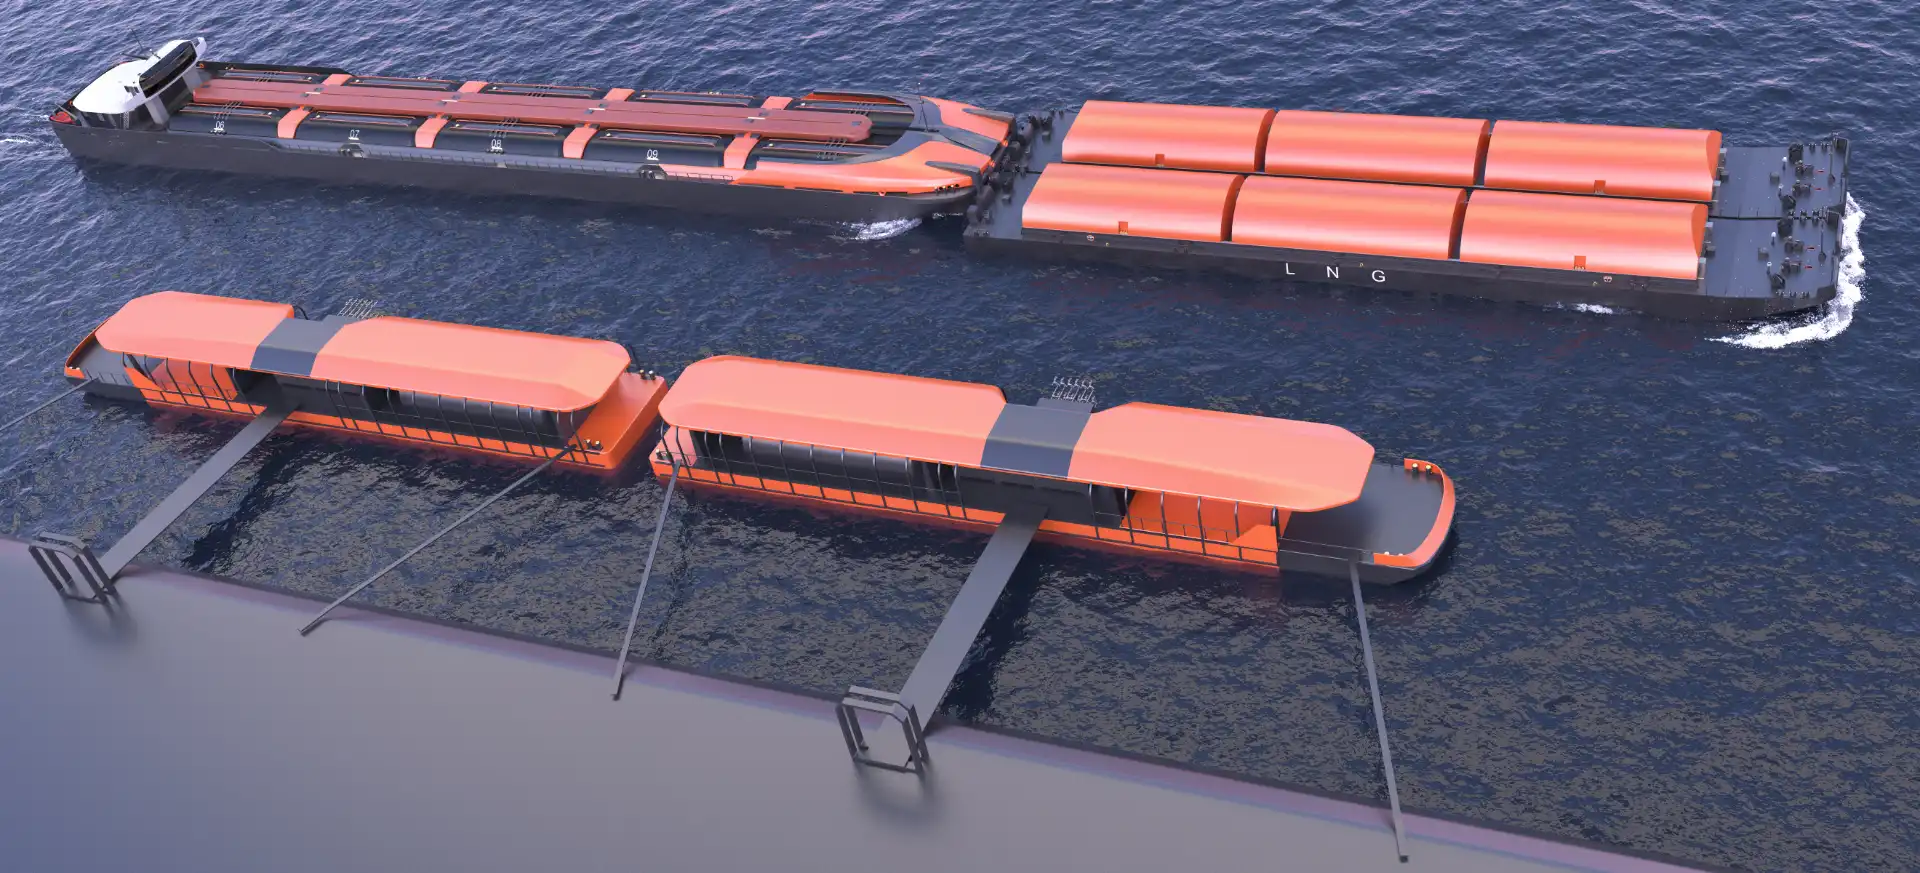 LNG Tanker visualizations dock_Design by Werkemotion